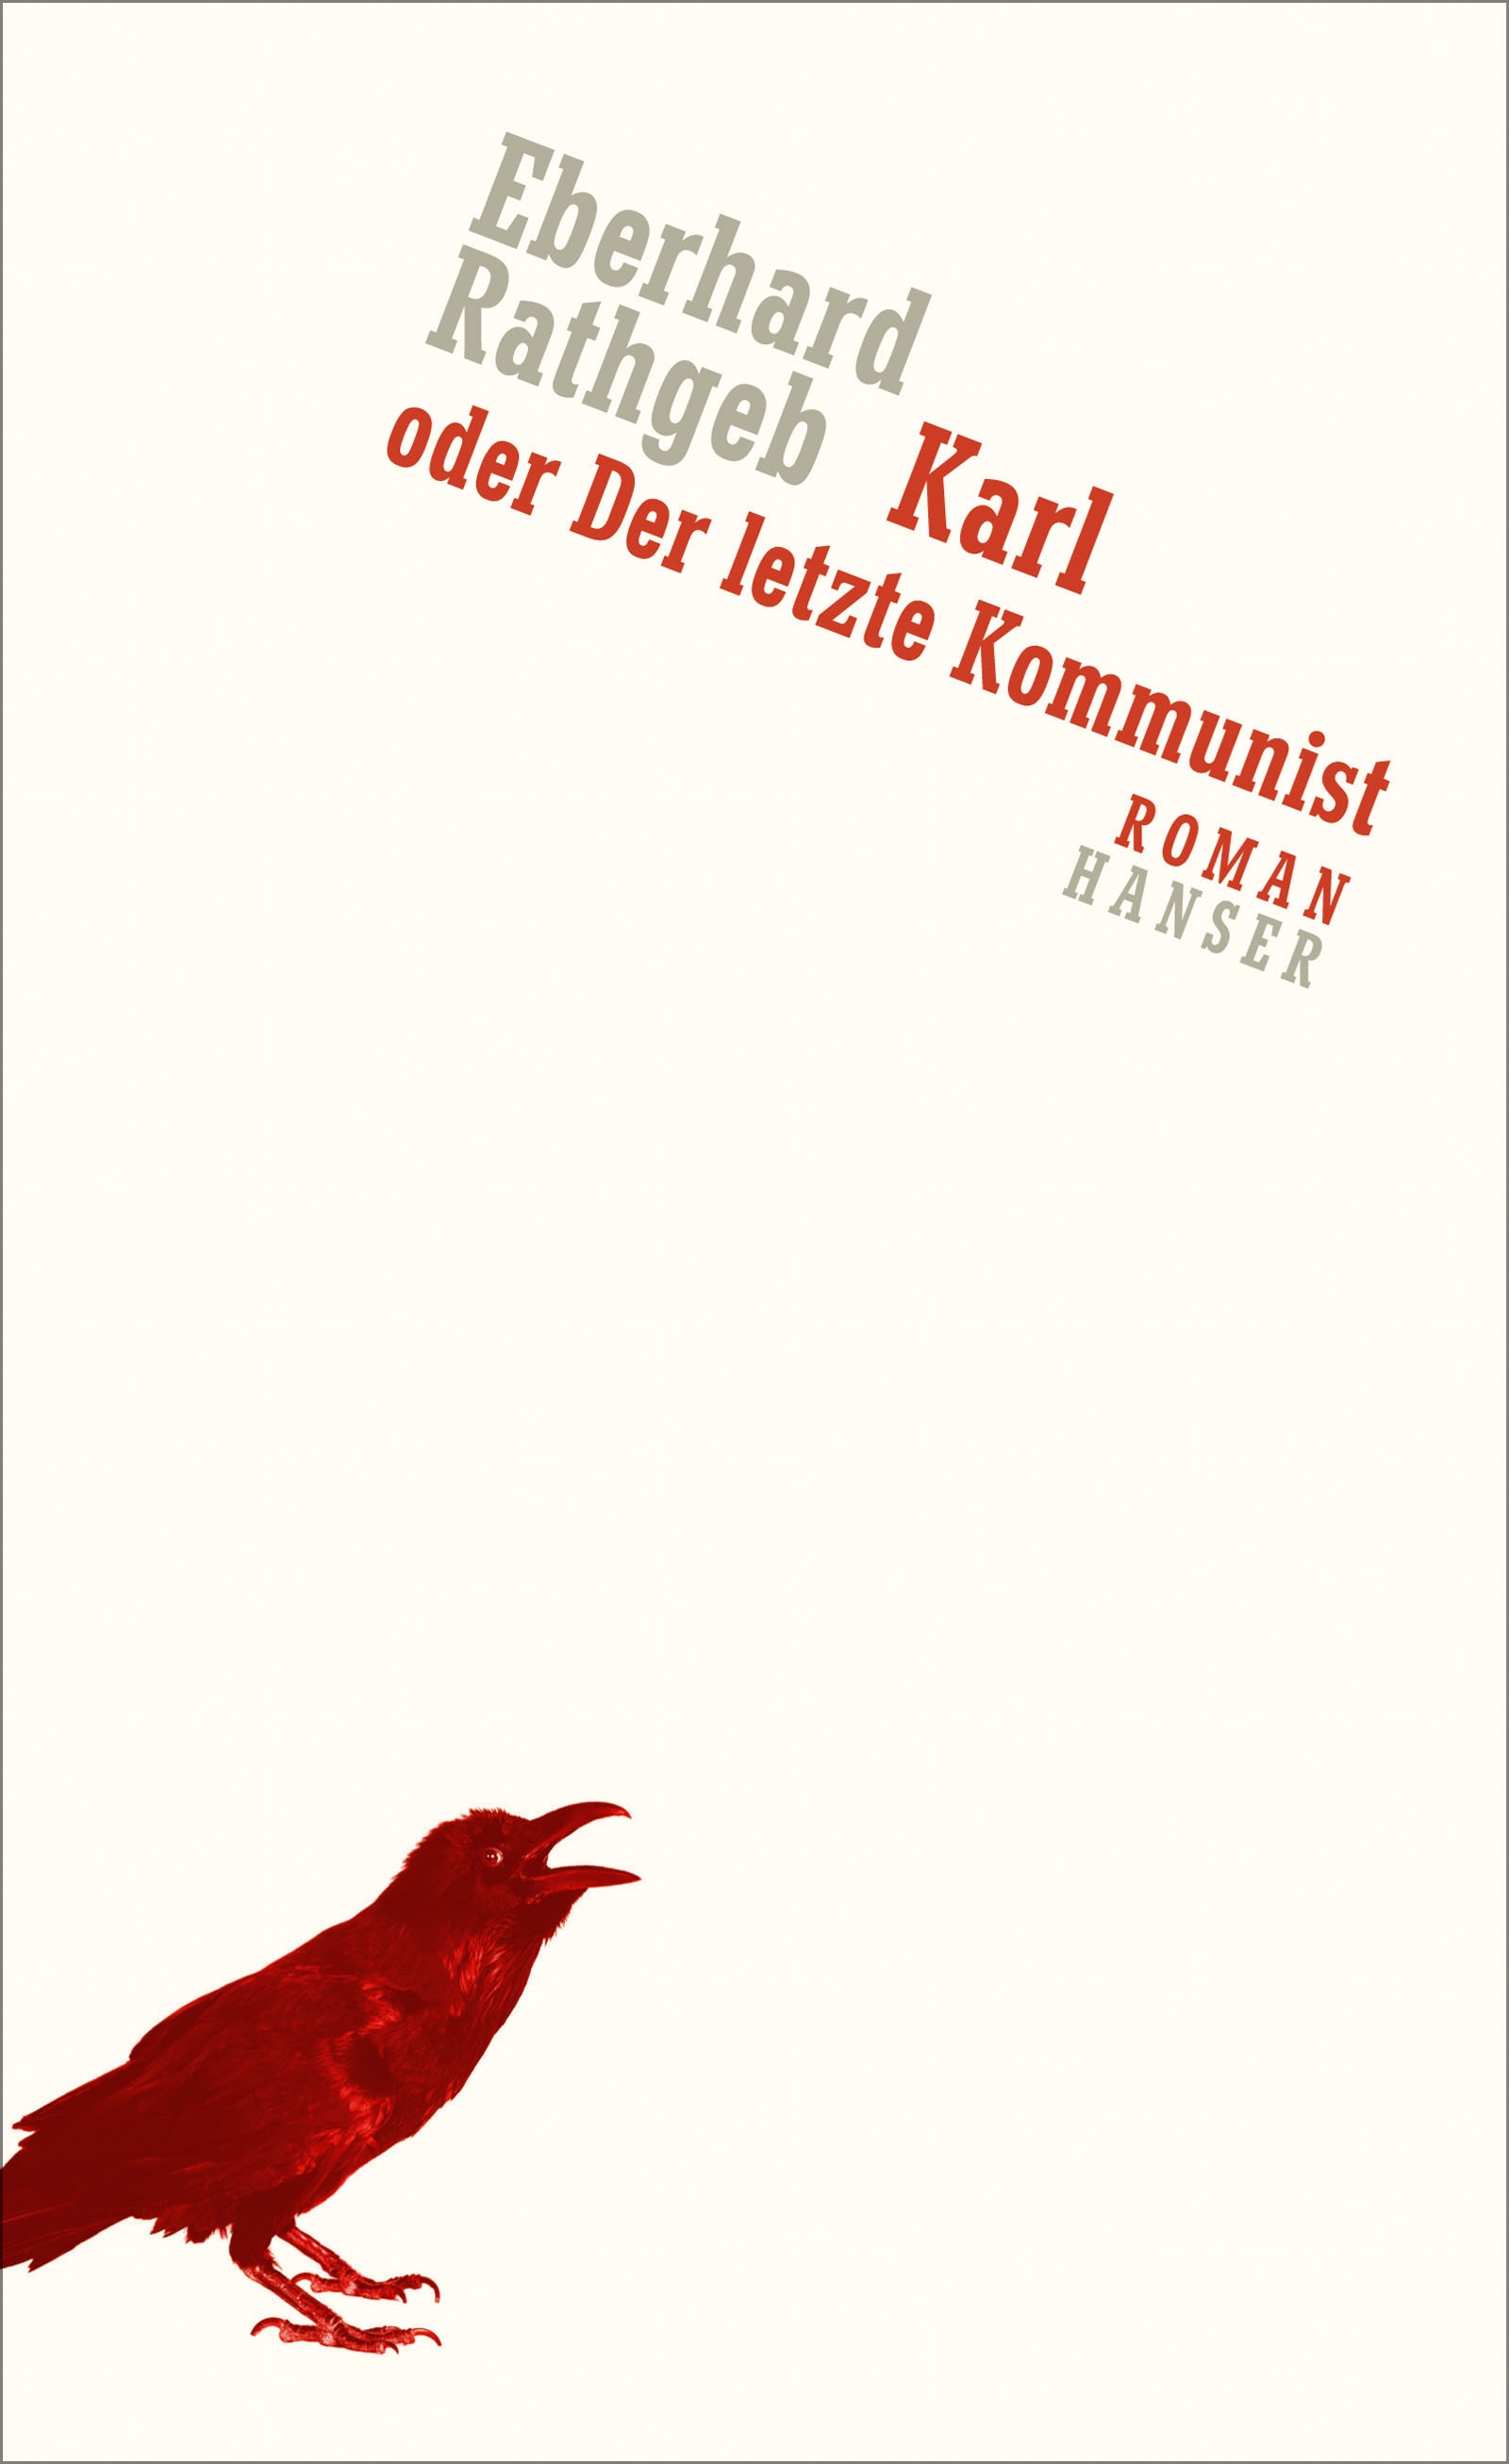 Karl or The Last Communist